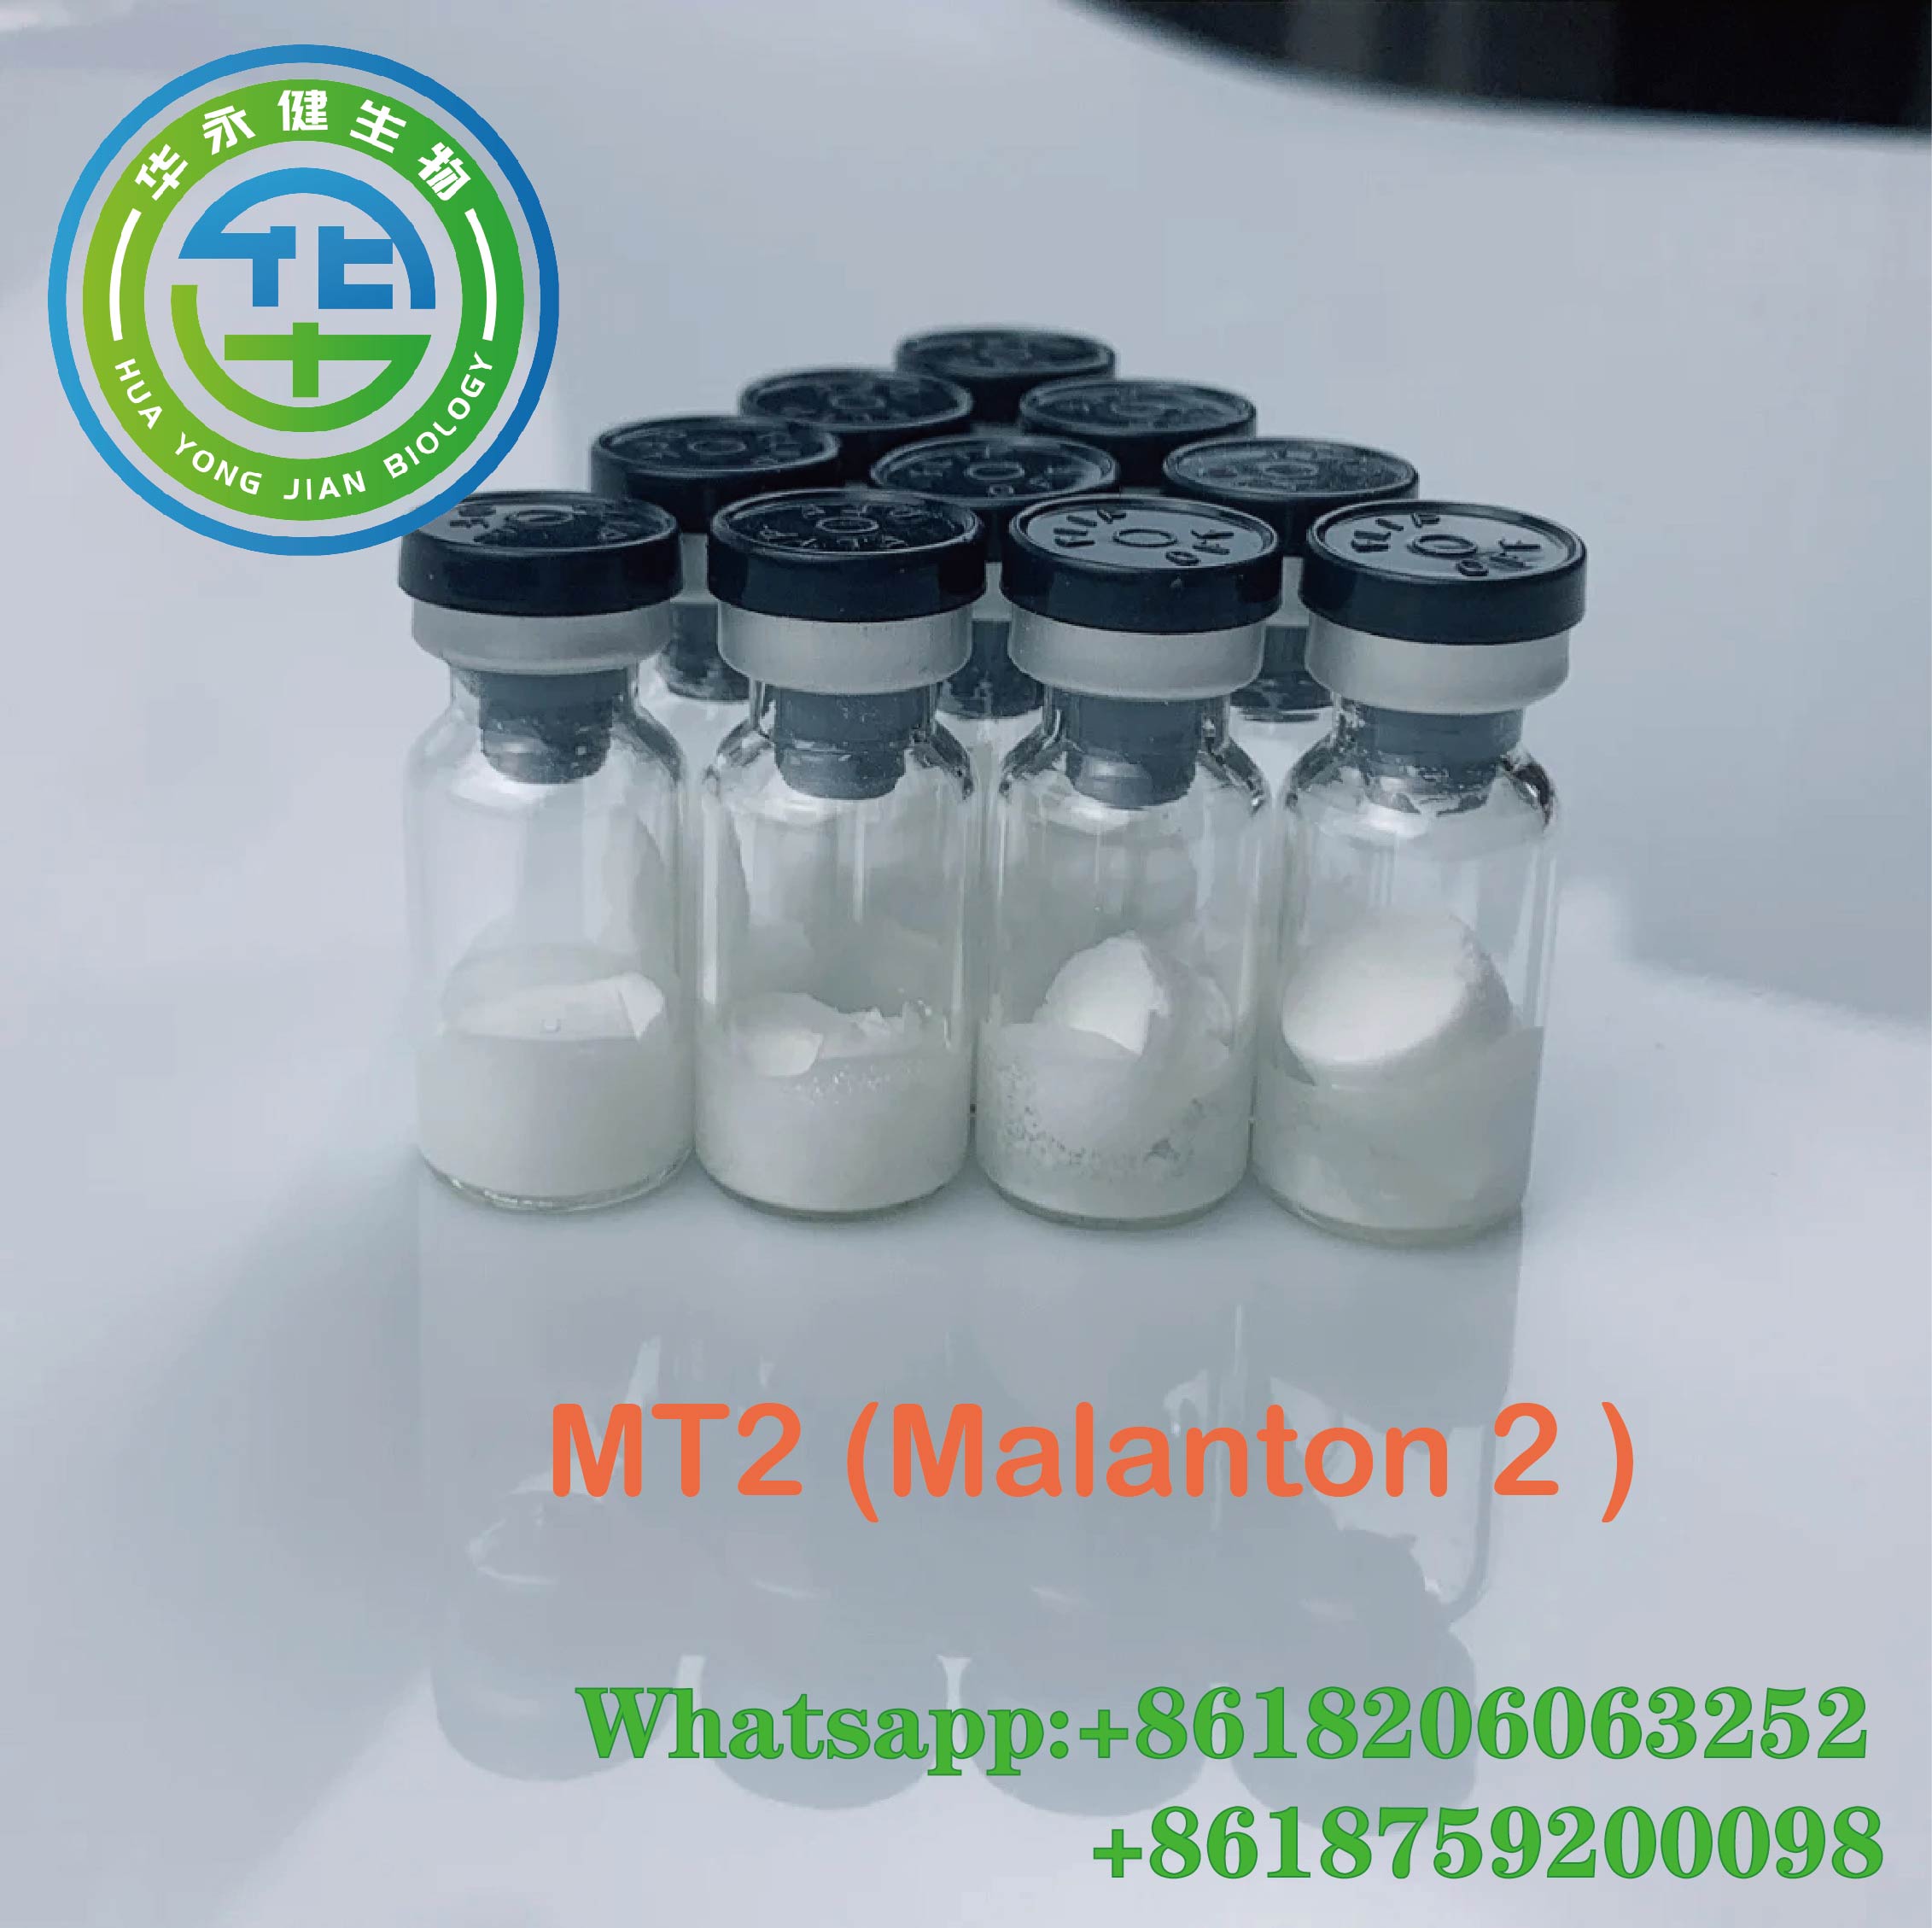 Injection Recombinant Human Malanton 2  for Bone Repairing High Purity Melanotan II Peptides Powder CasNO.121062-08-6